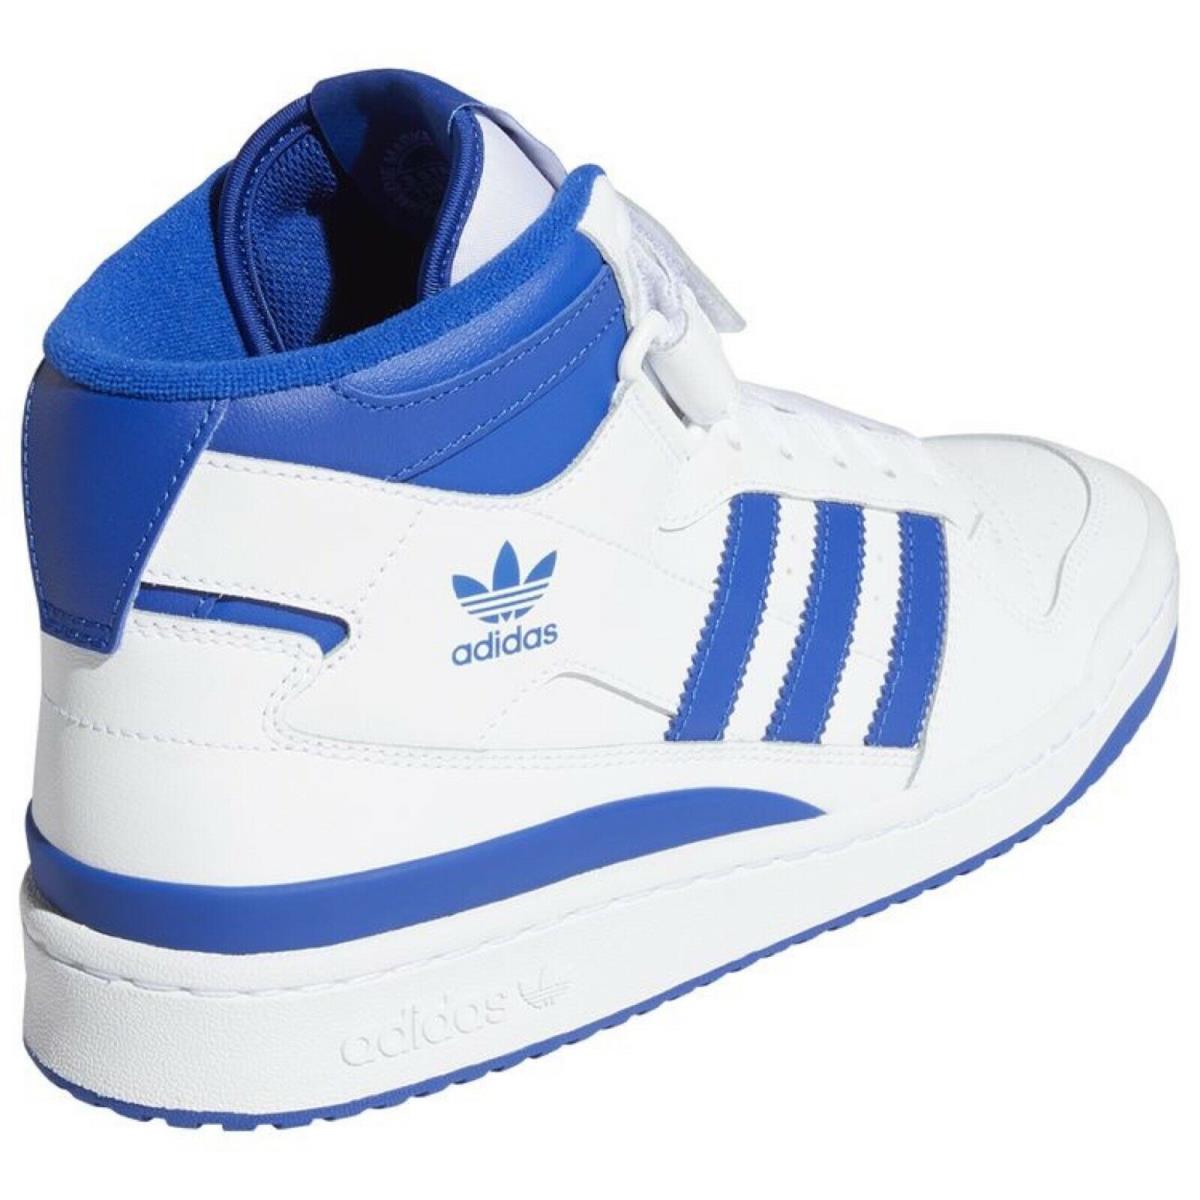 Adidas shoes Originals - White , White/Team Royal Blue/White Manufacturer 2